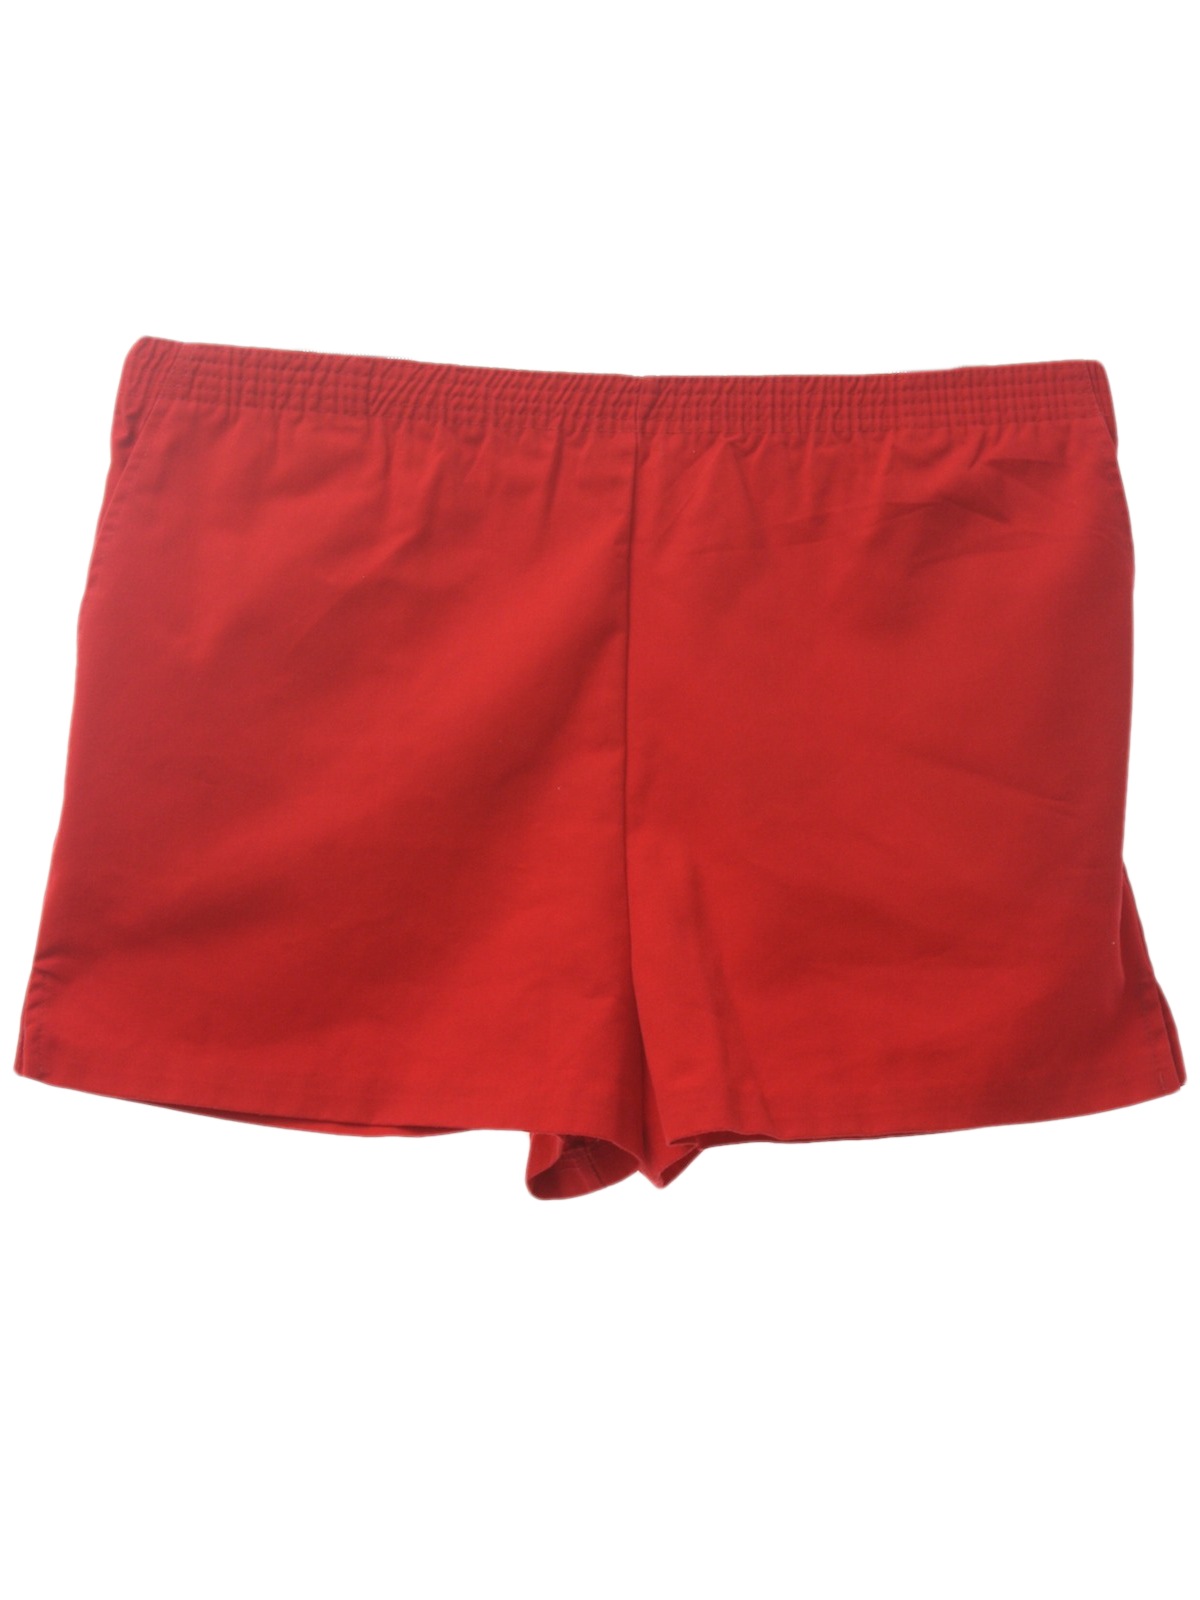 Retro 1980s Shorts: 80s -Lerner- Mens red background cotton sport/gym ...